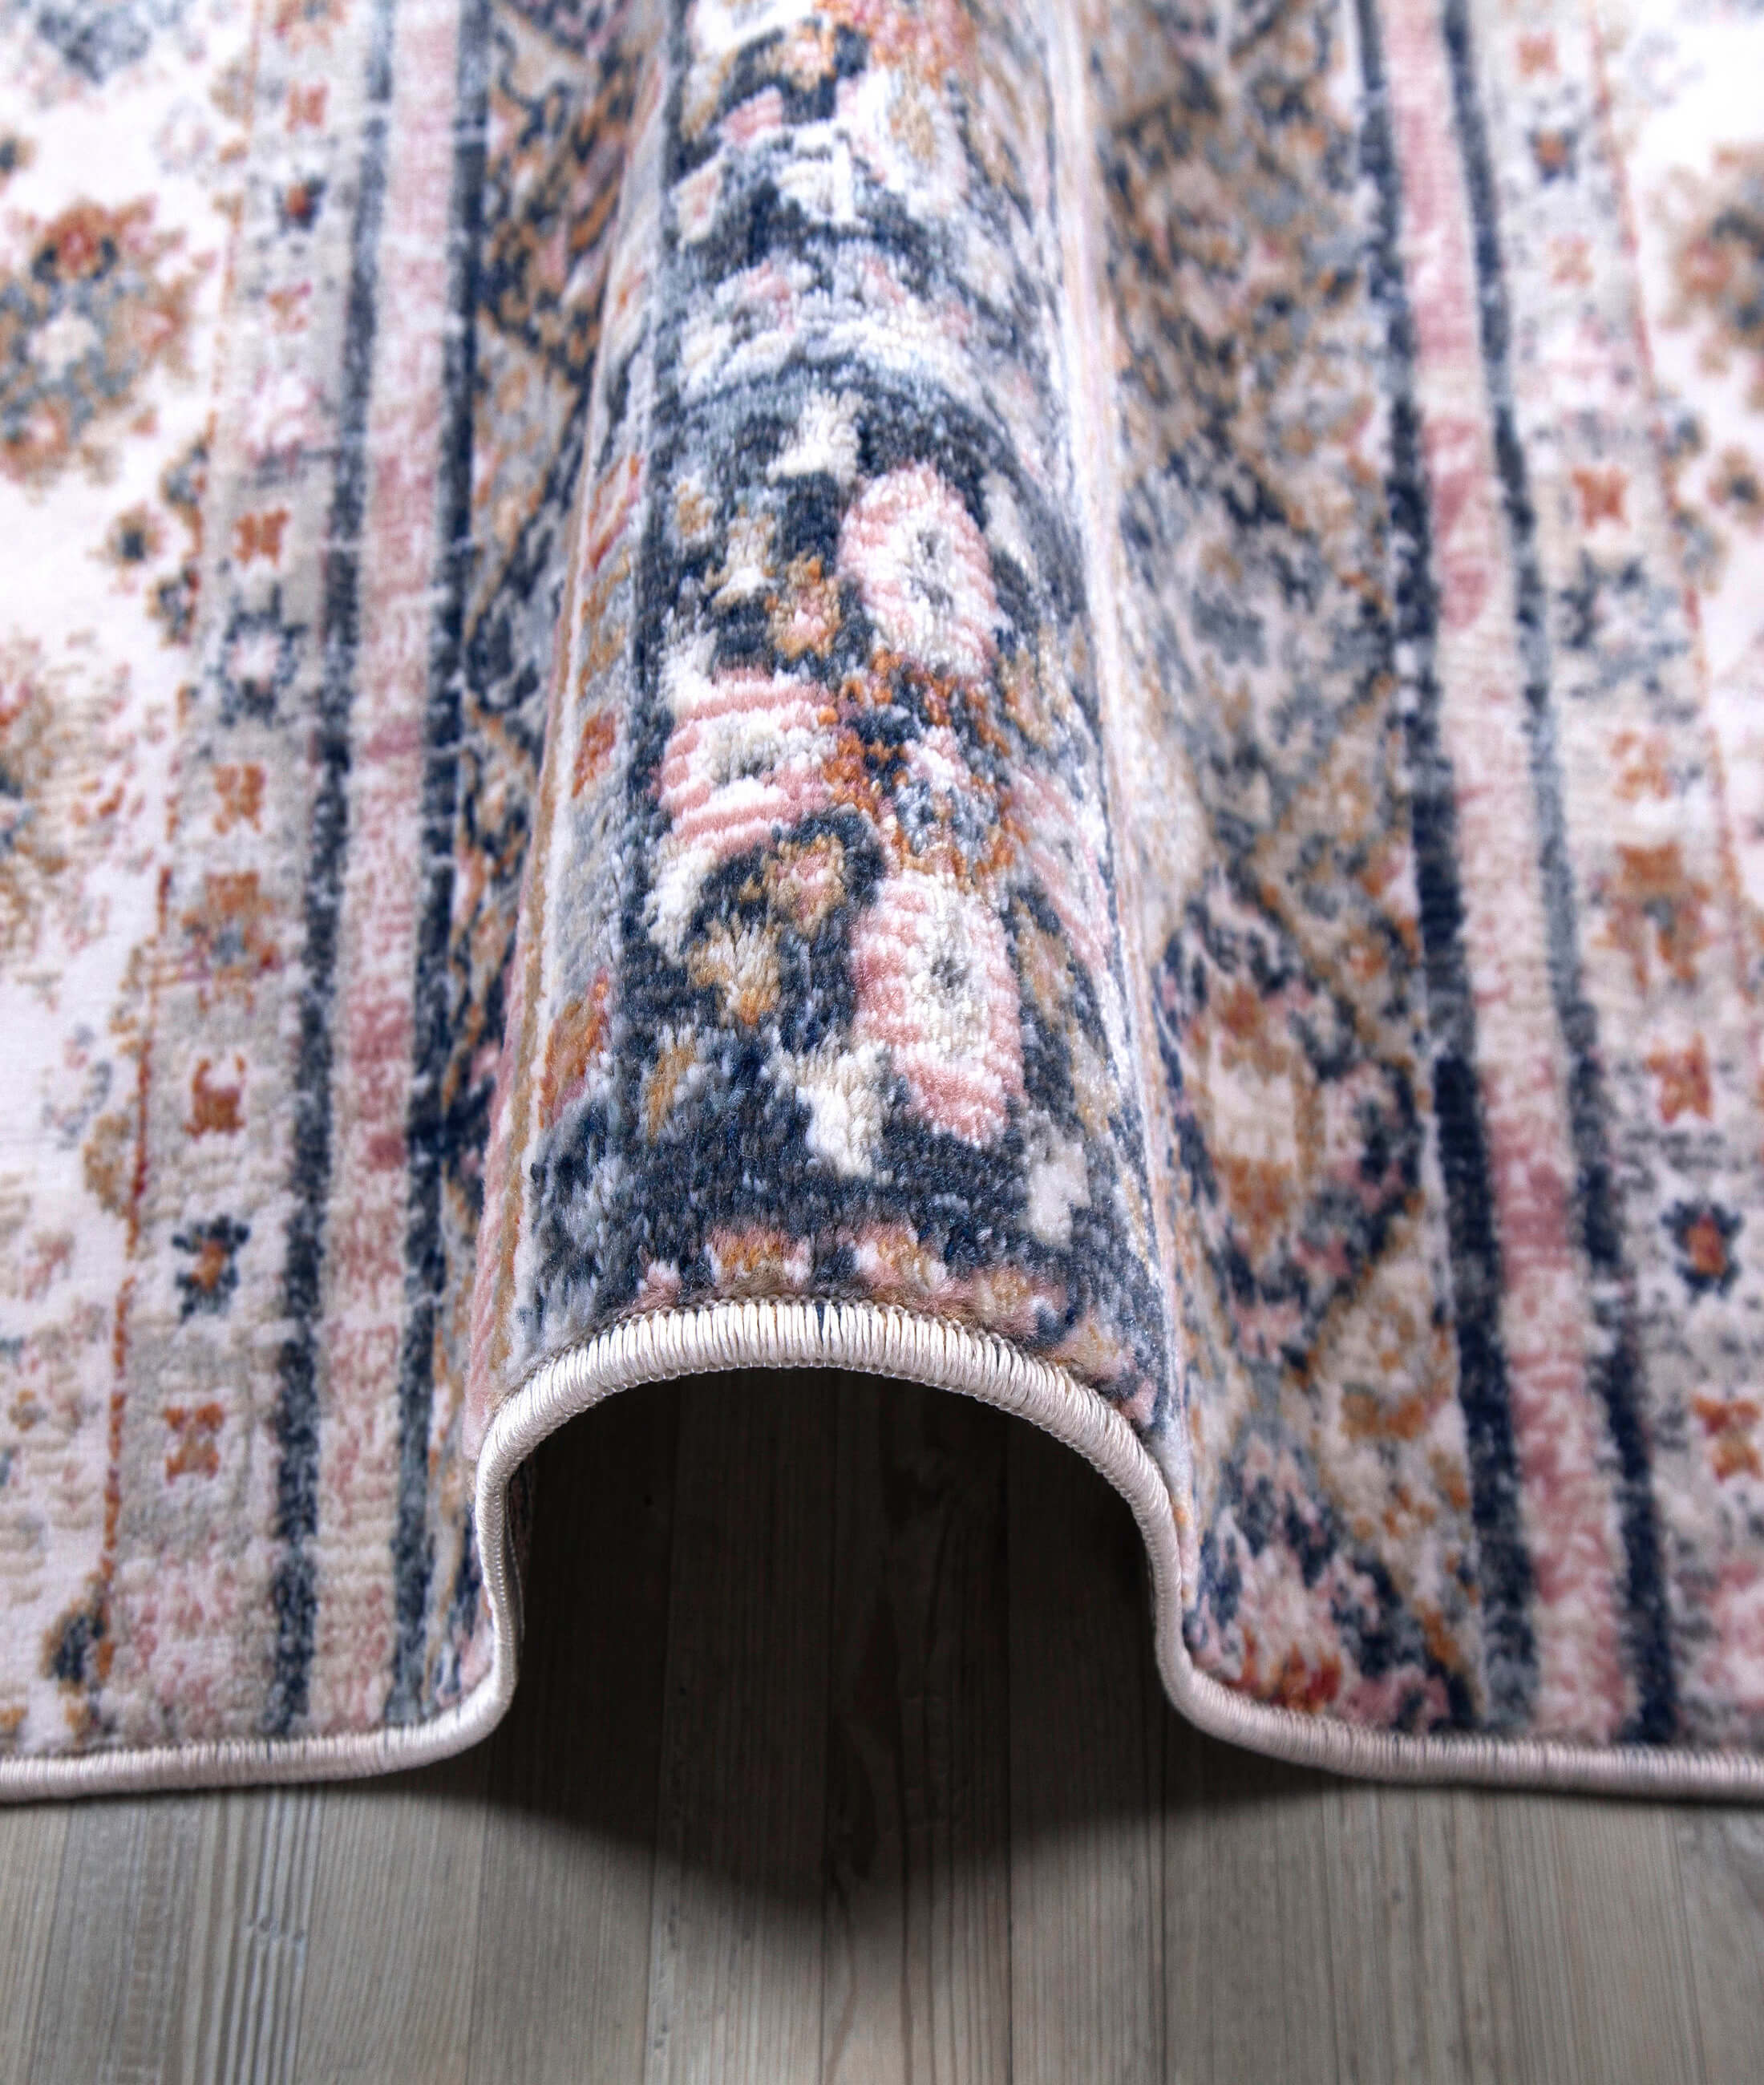 Bohemian Multicolor Carpet 38286A